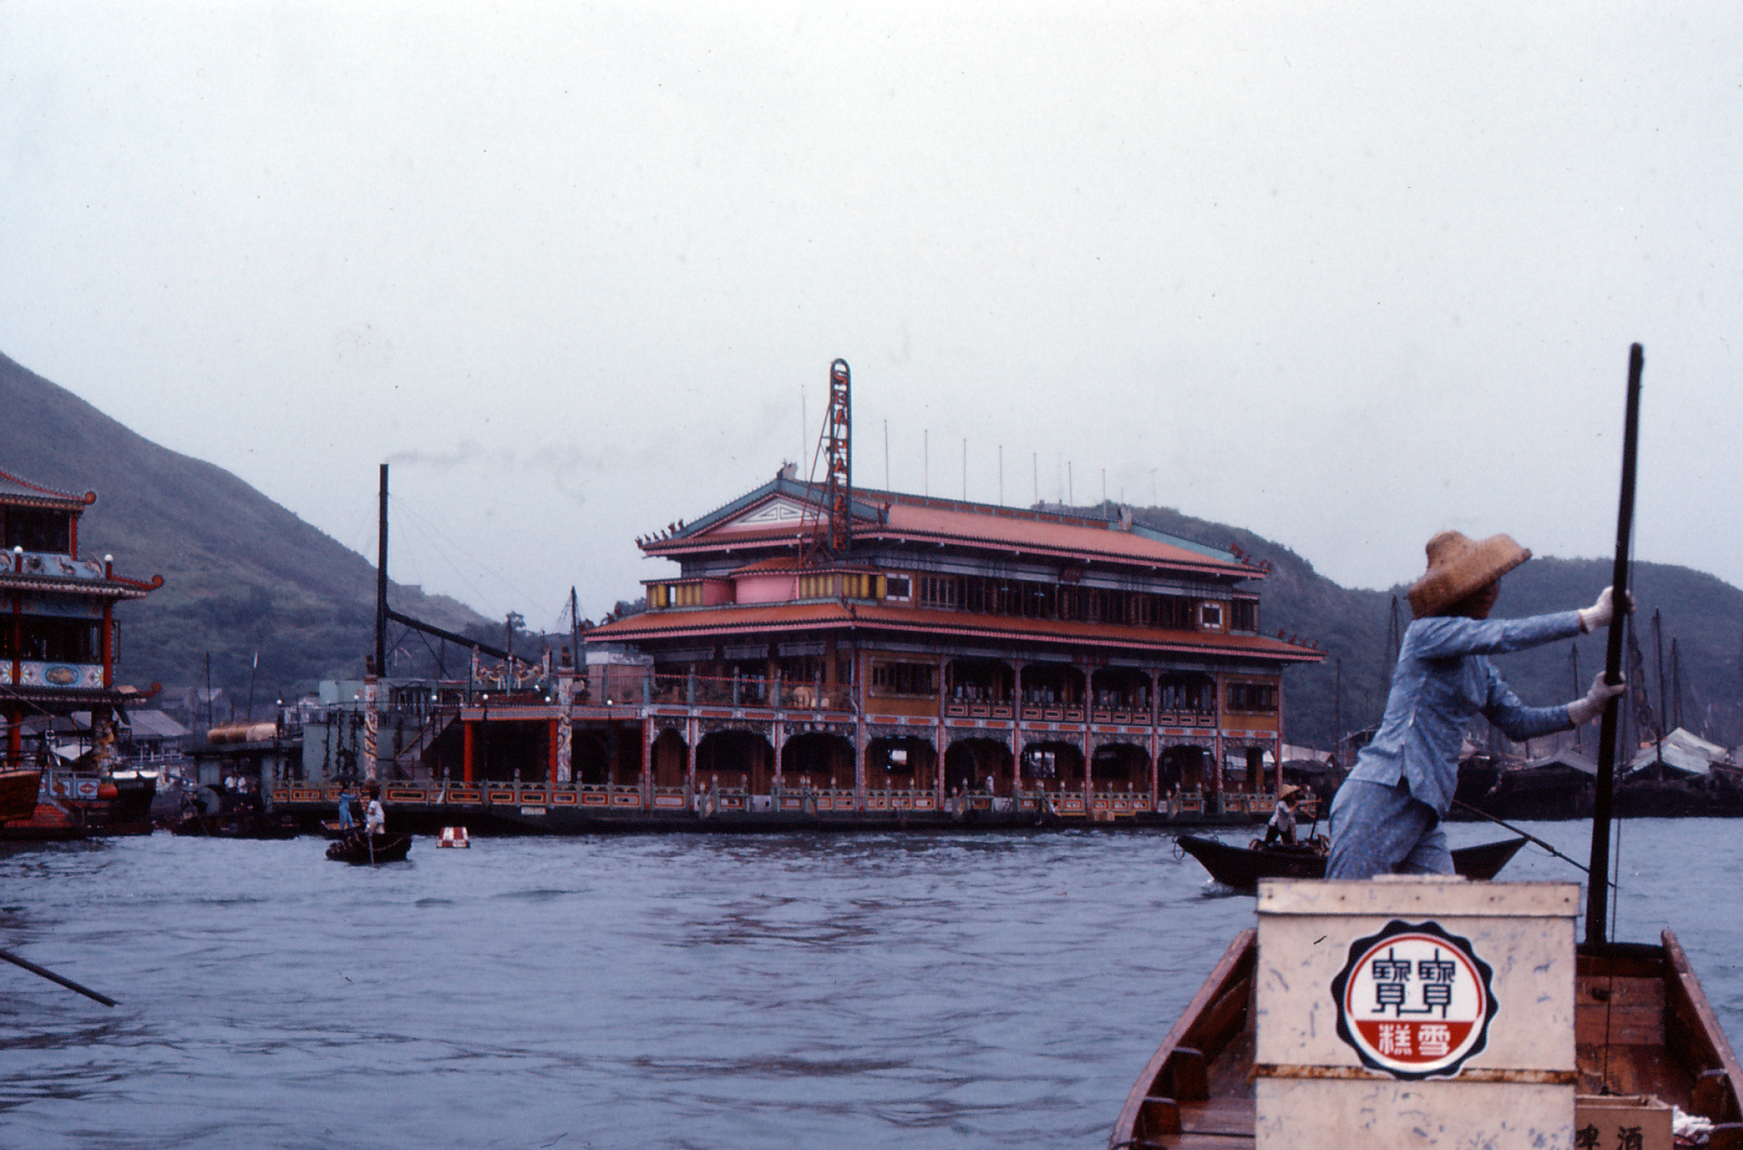 Hong Kong's famous floating restaurant